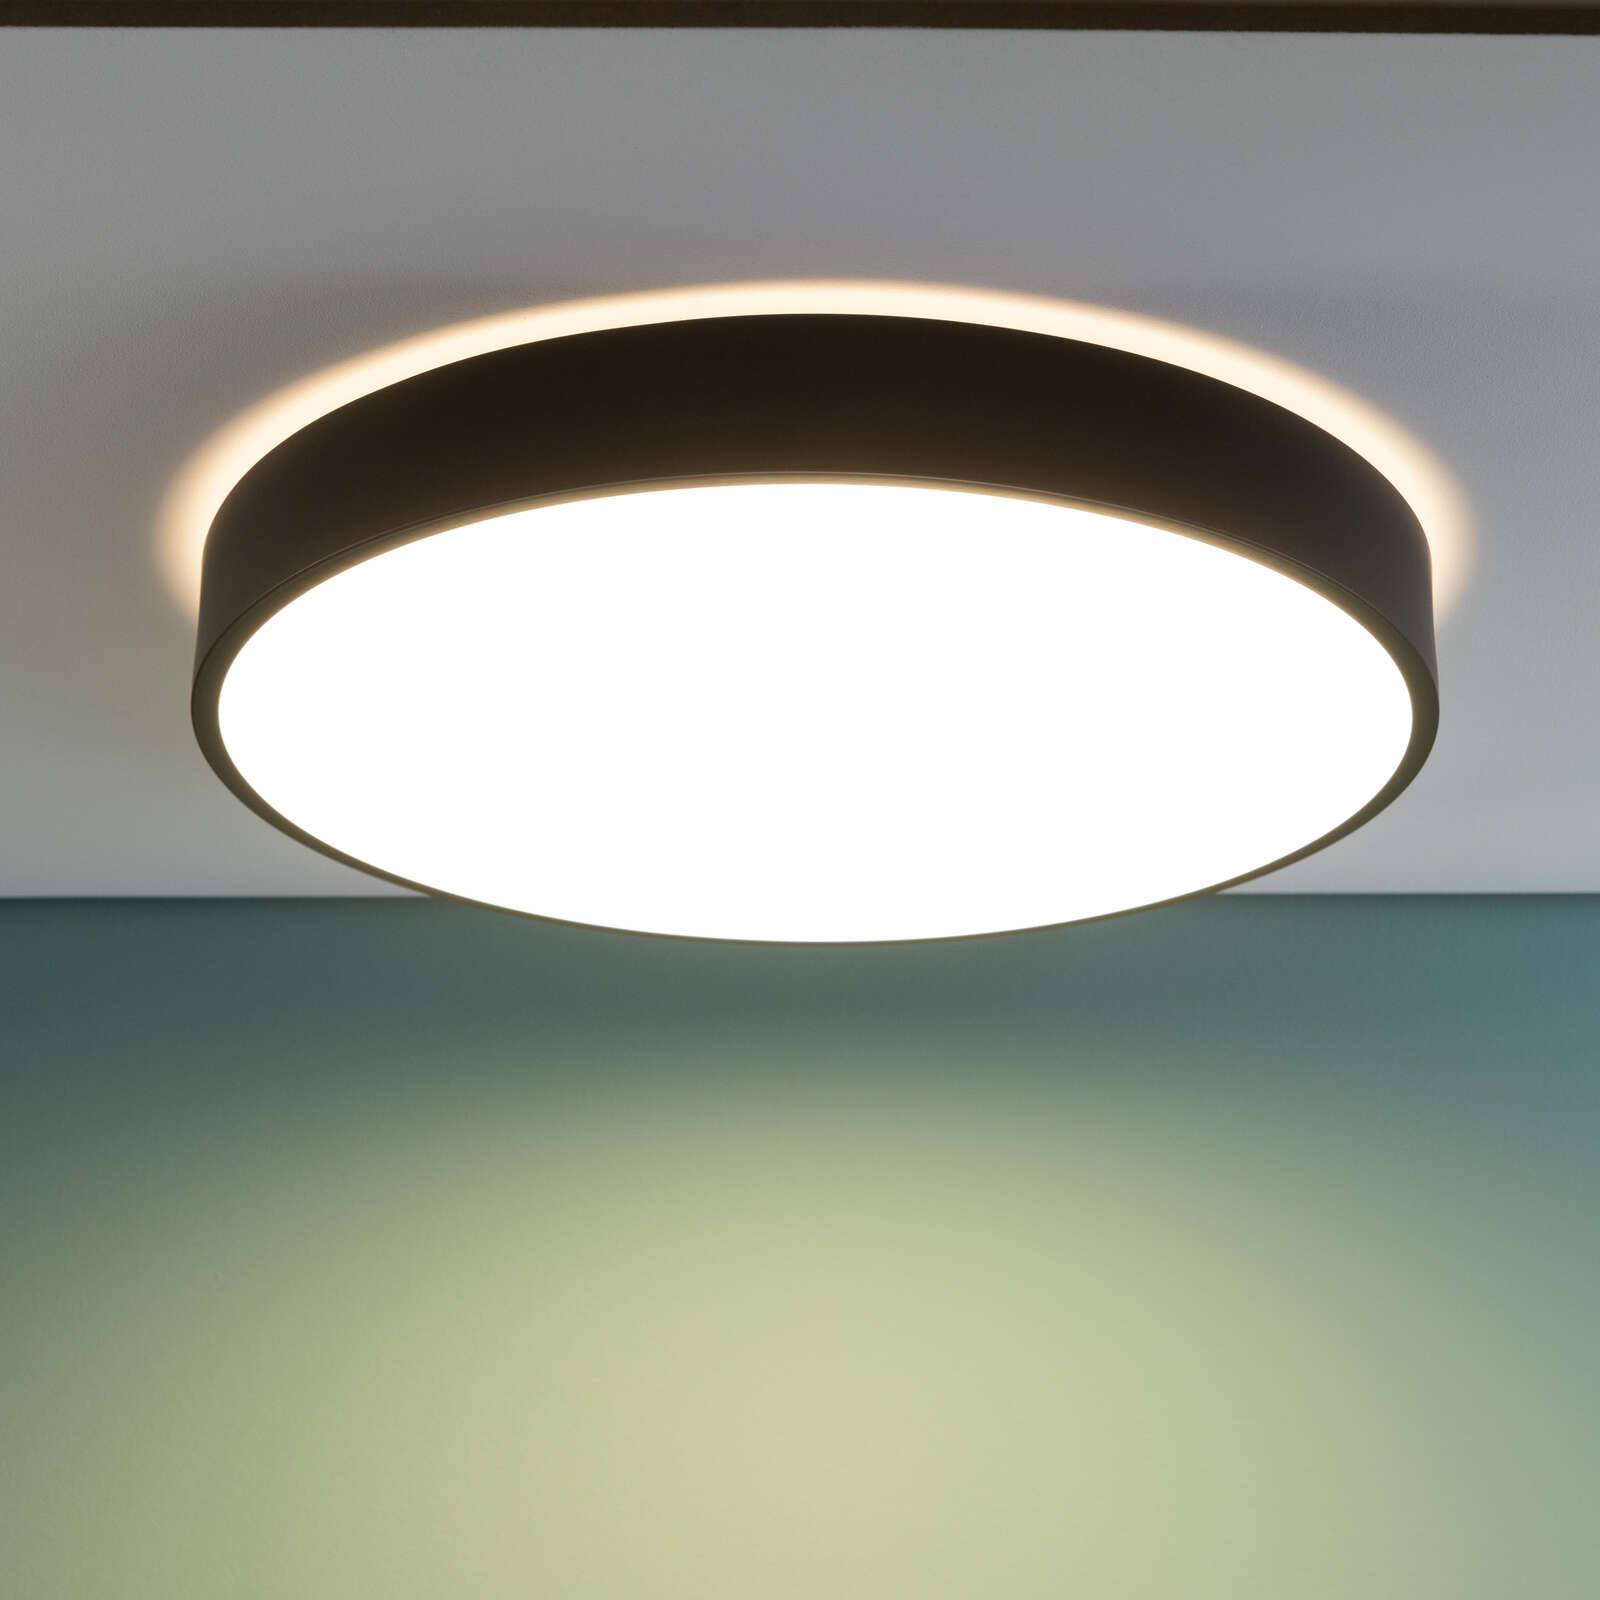             Plastic ceiling light - Niklas 8 - Black
        